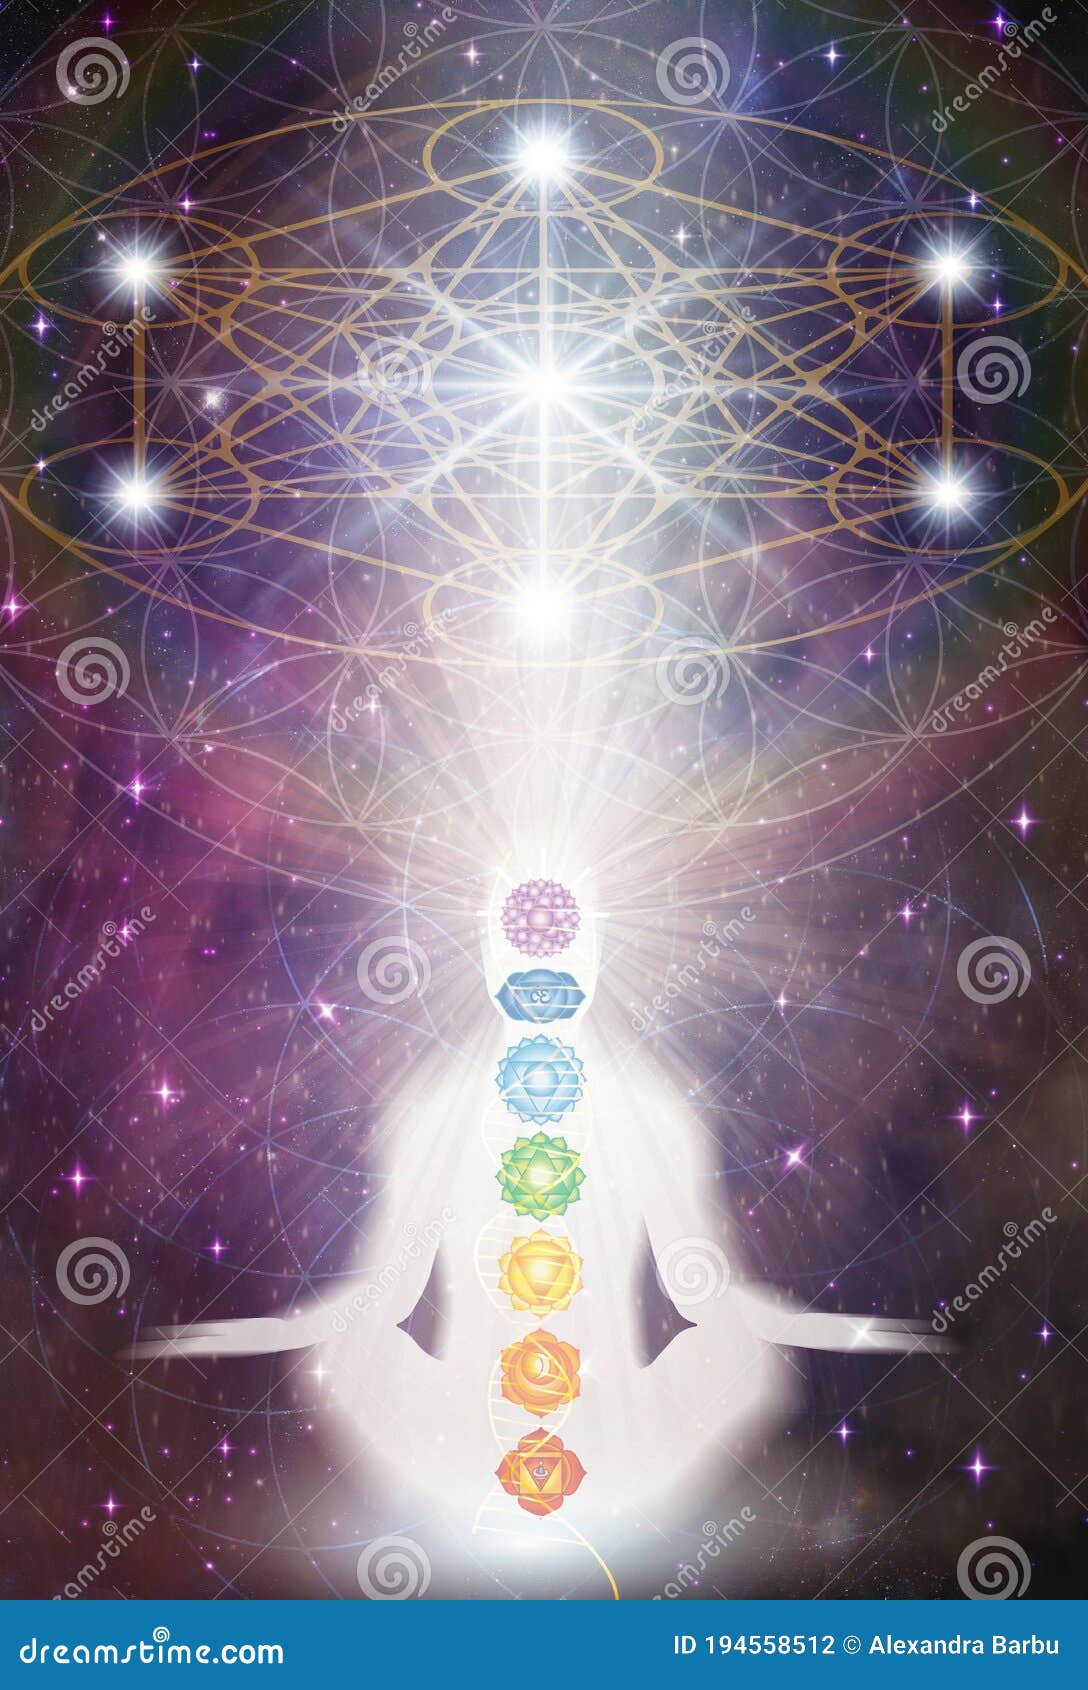 man universe, meditation, spiritual healing, human body energy, astral projection, travel